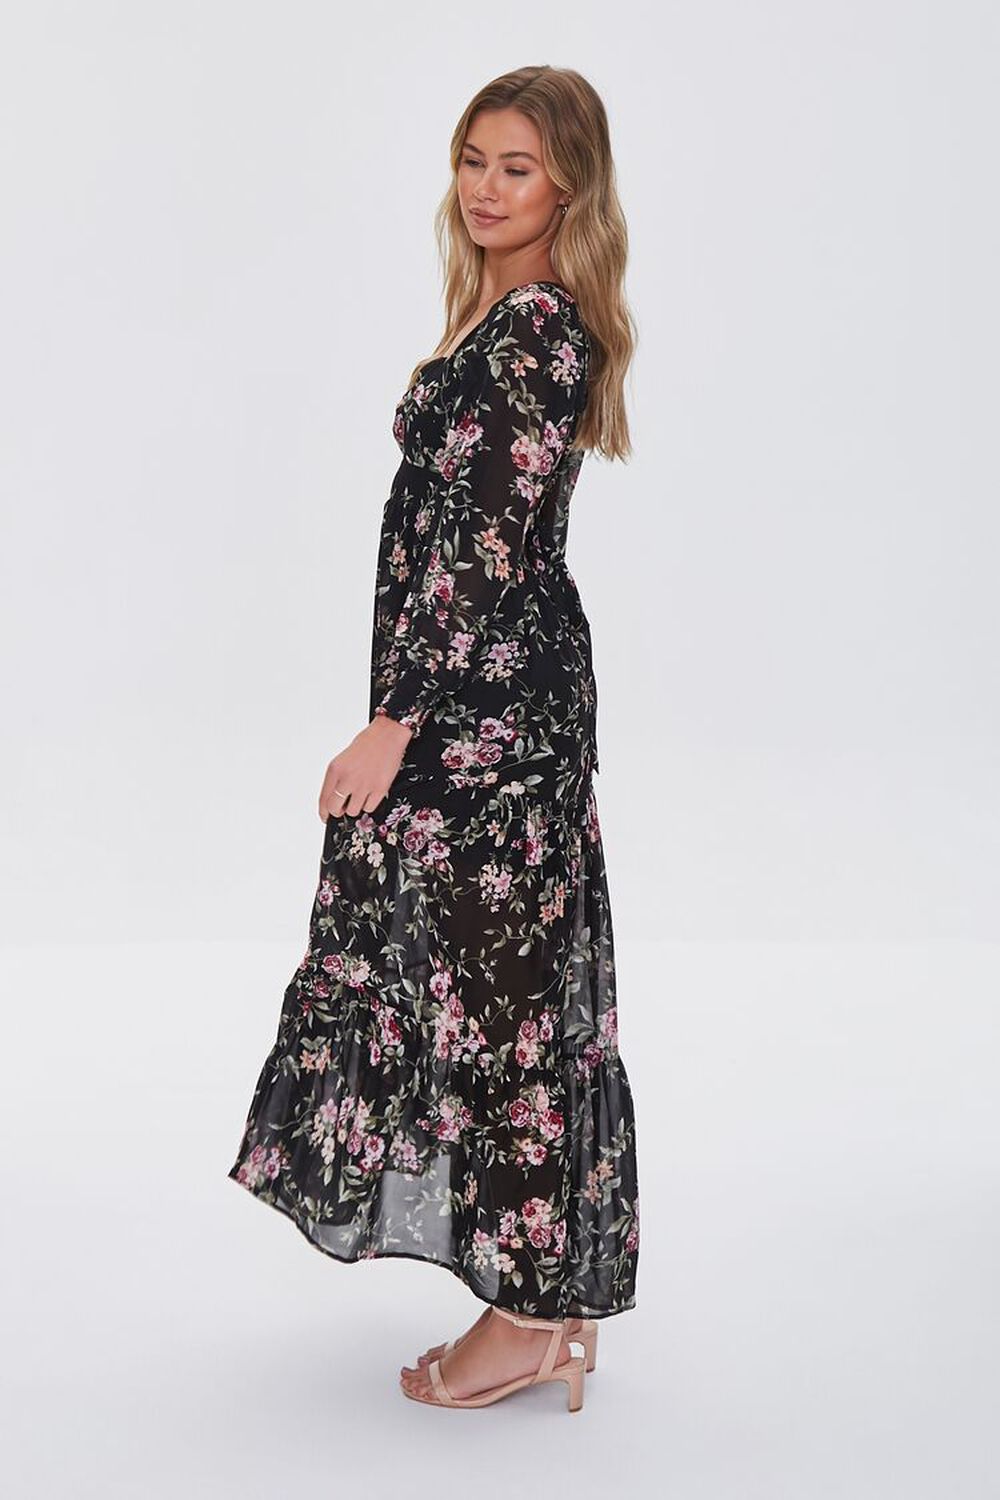 BLACK/MULTI Floral Print Maxi Dress, image 3